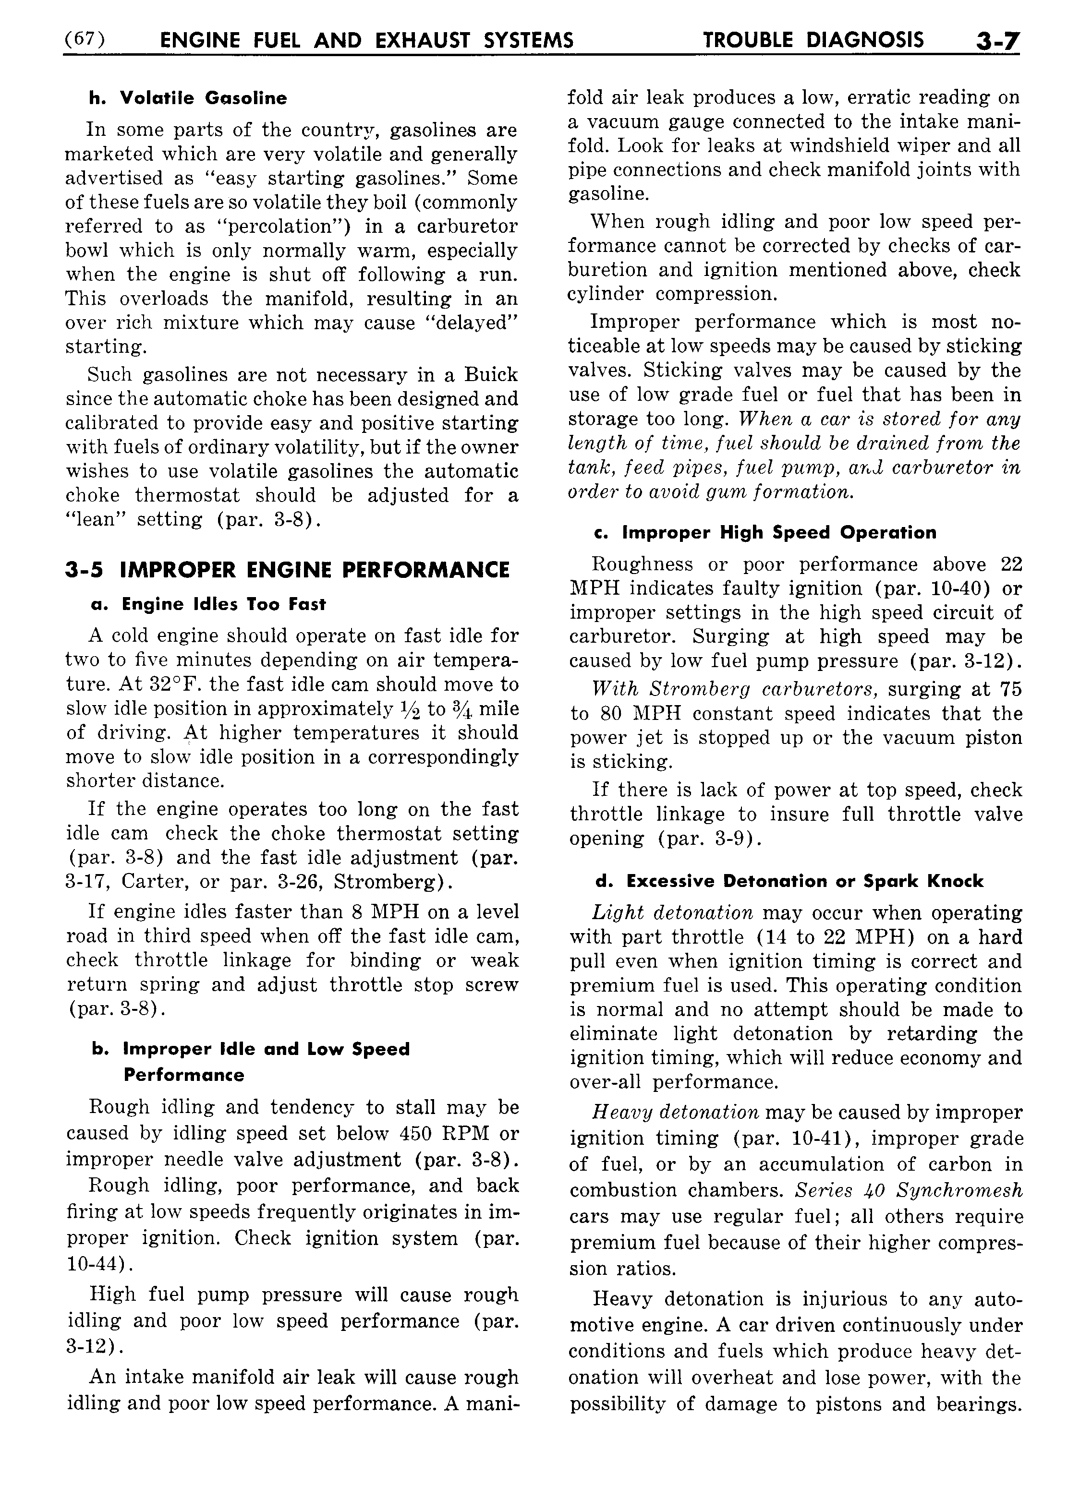 n_04 1954 Buick Shop Manual - Engine Fuel & Exhaust-007-007.jpg